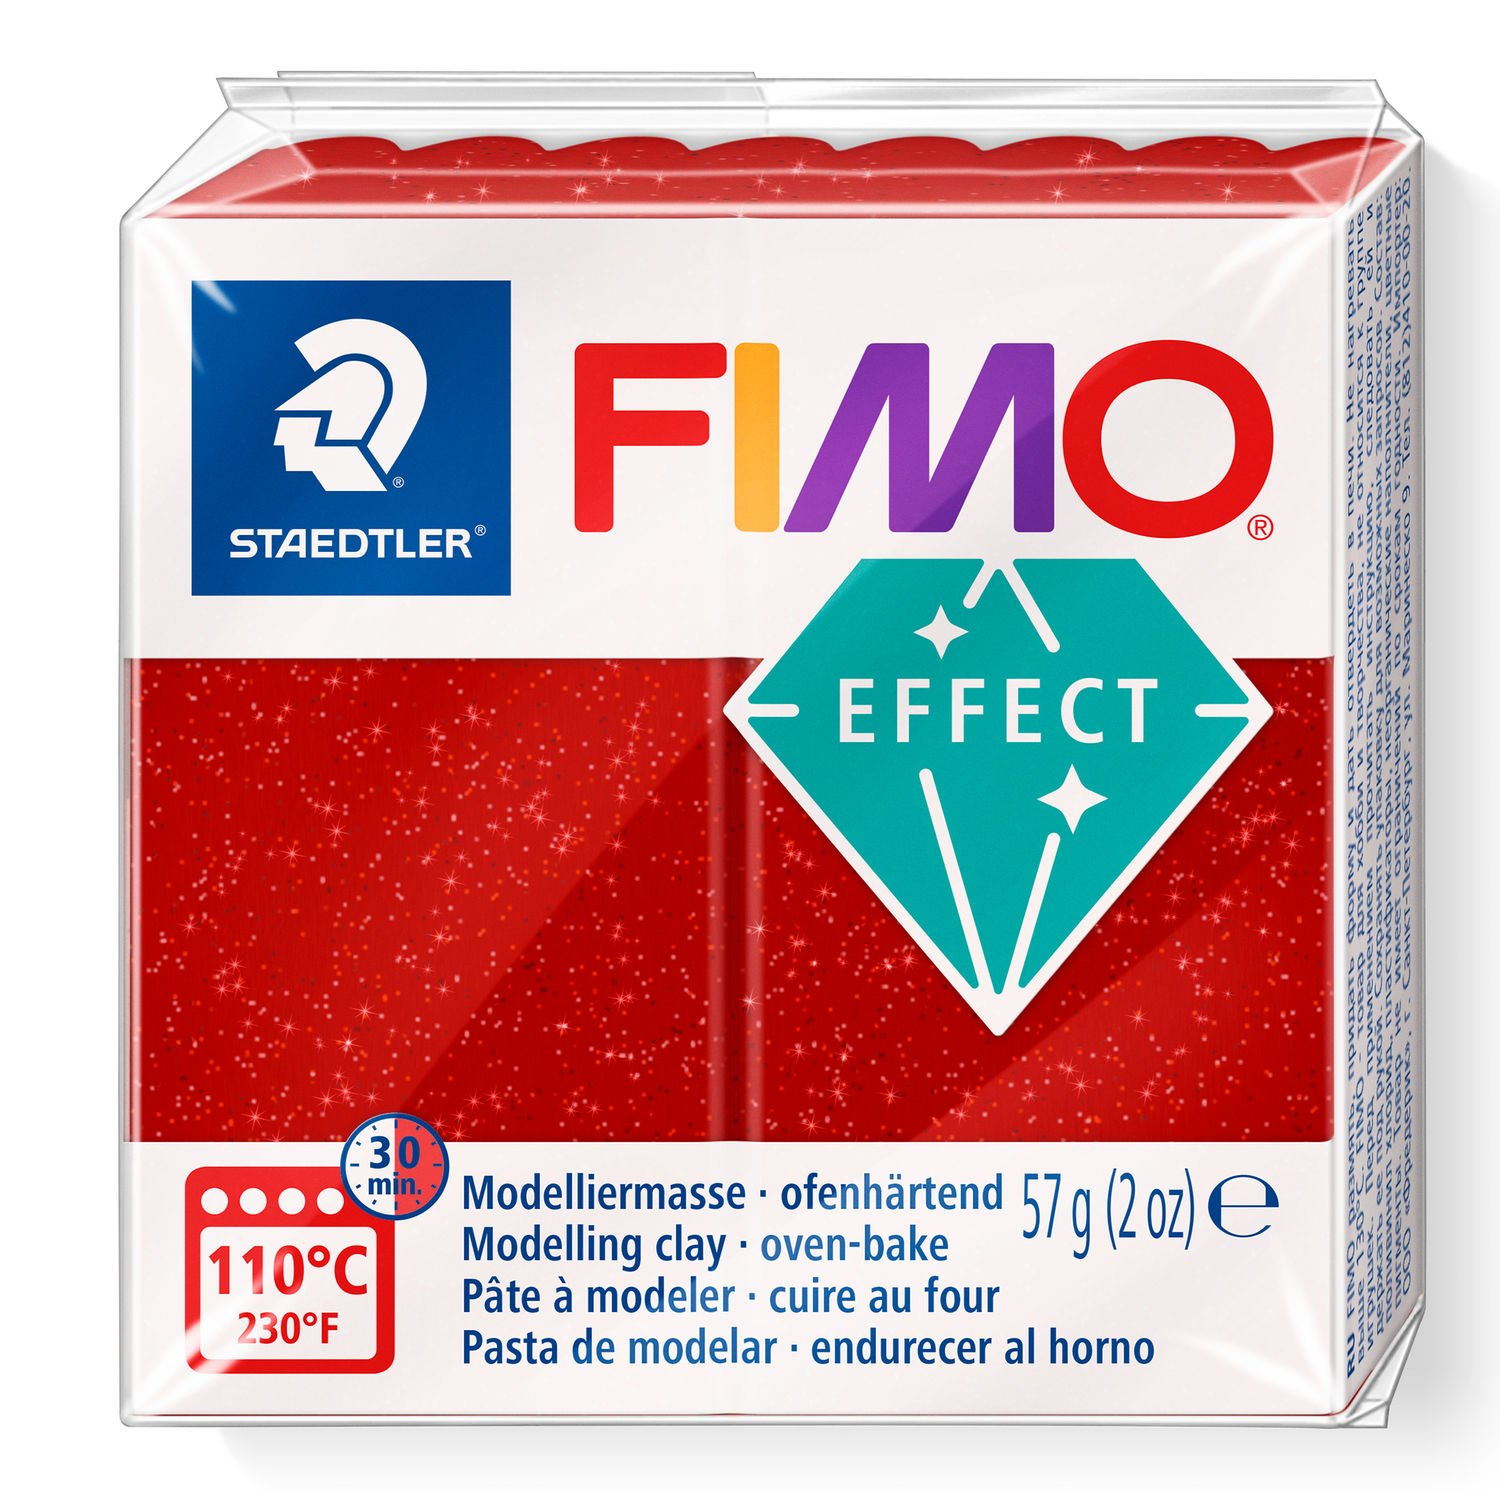 STAEDTLER FIMO 8020 - Knetmasse - Rot - Erwachsene - 1 Stück(e) - Glitter red - 1 Farben